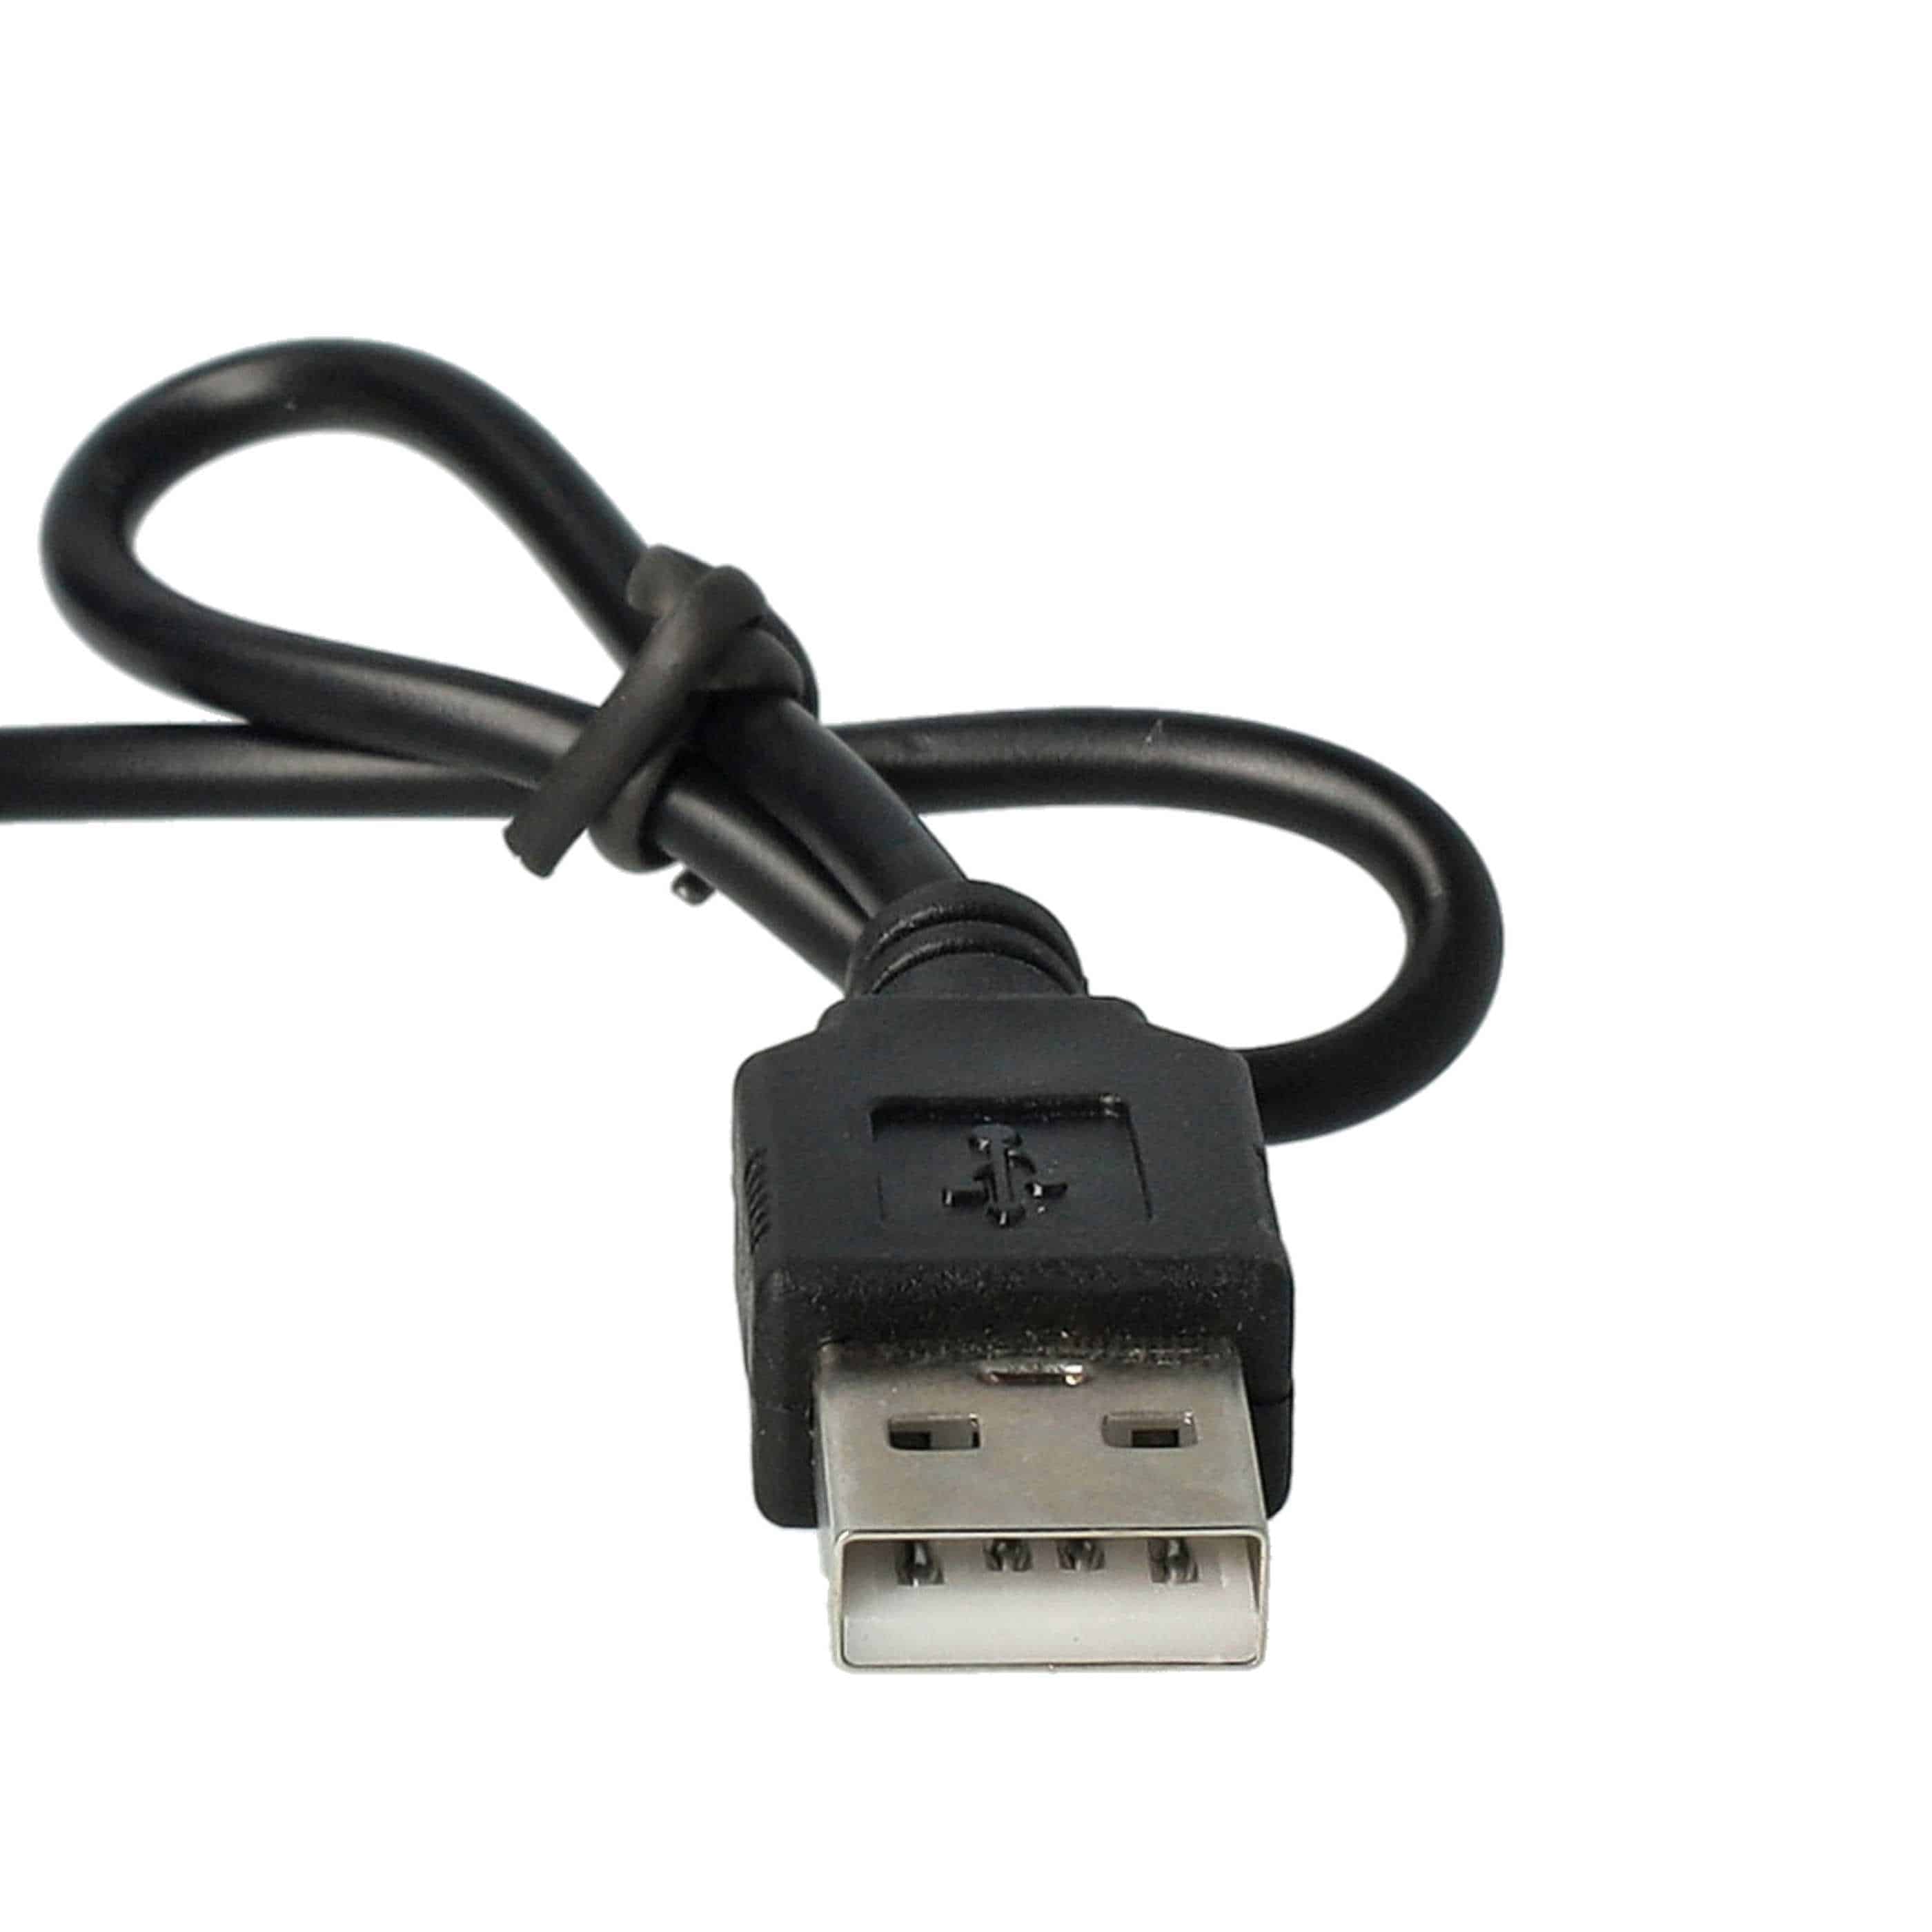 vhbw USB Charger E-Cigarette, E-Shisha wtih Screw Thread - 25cm Cable